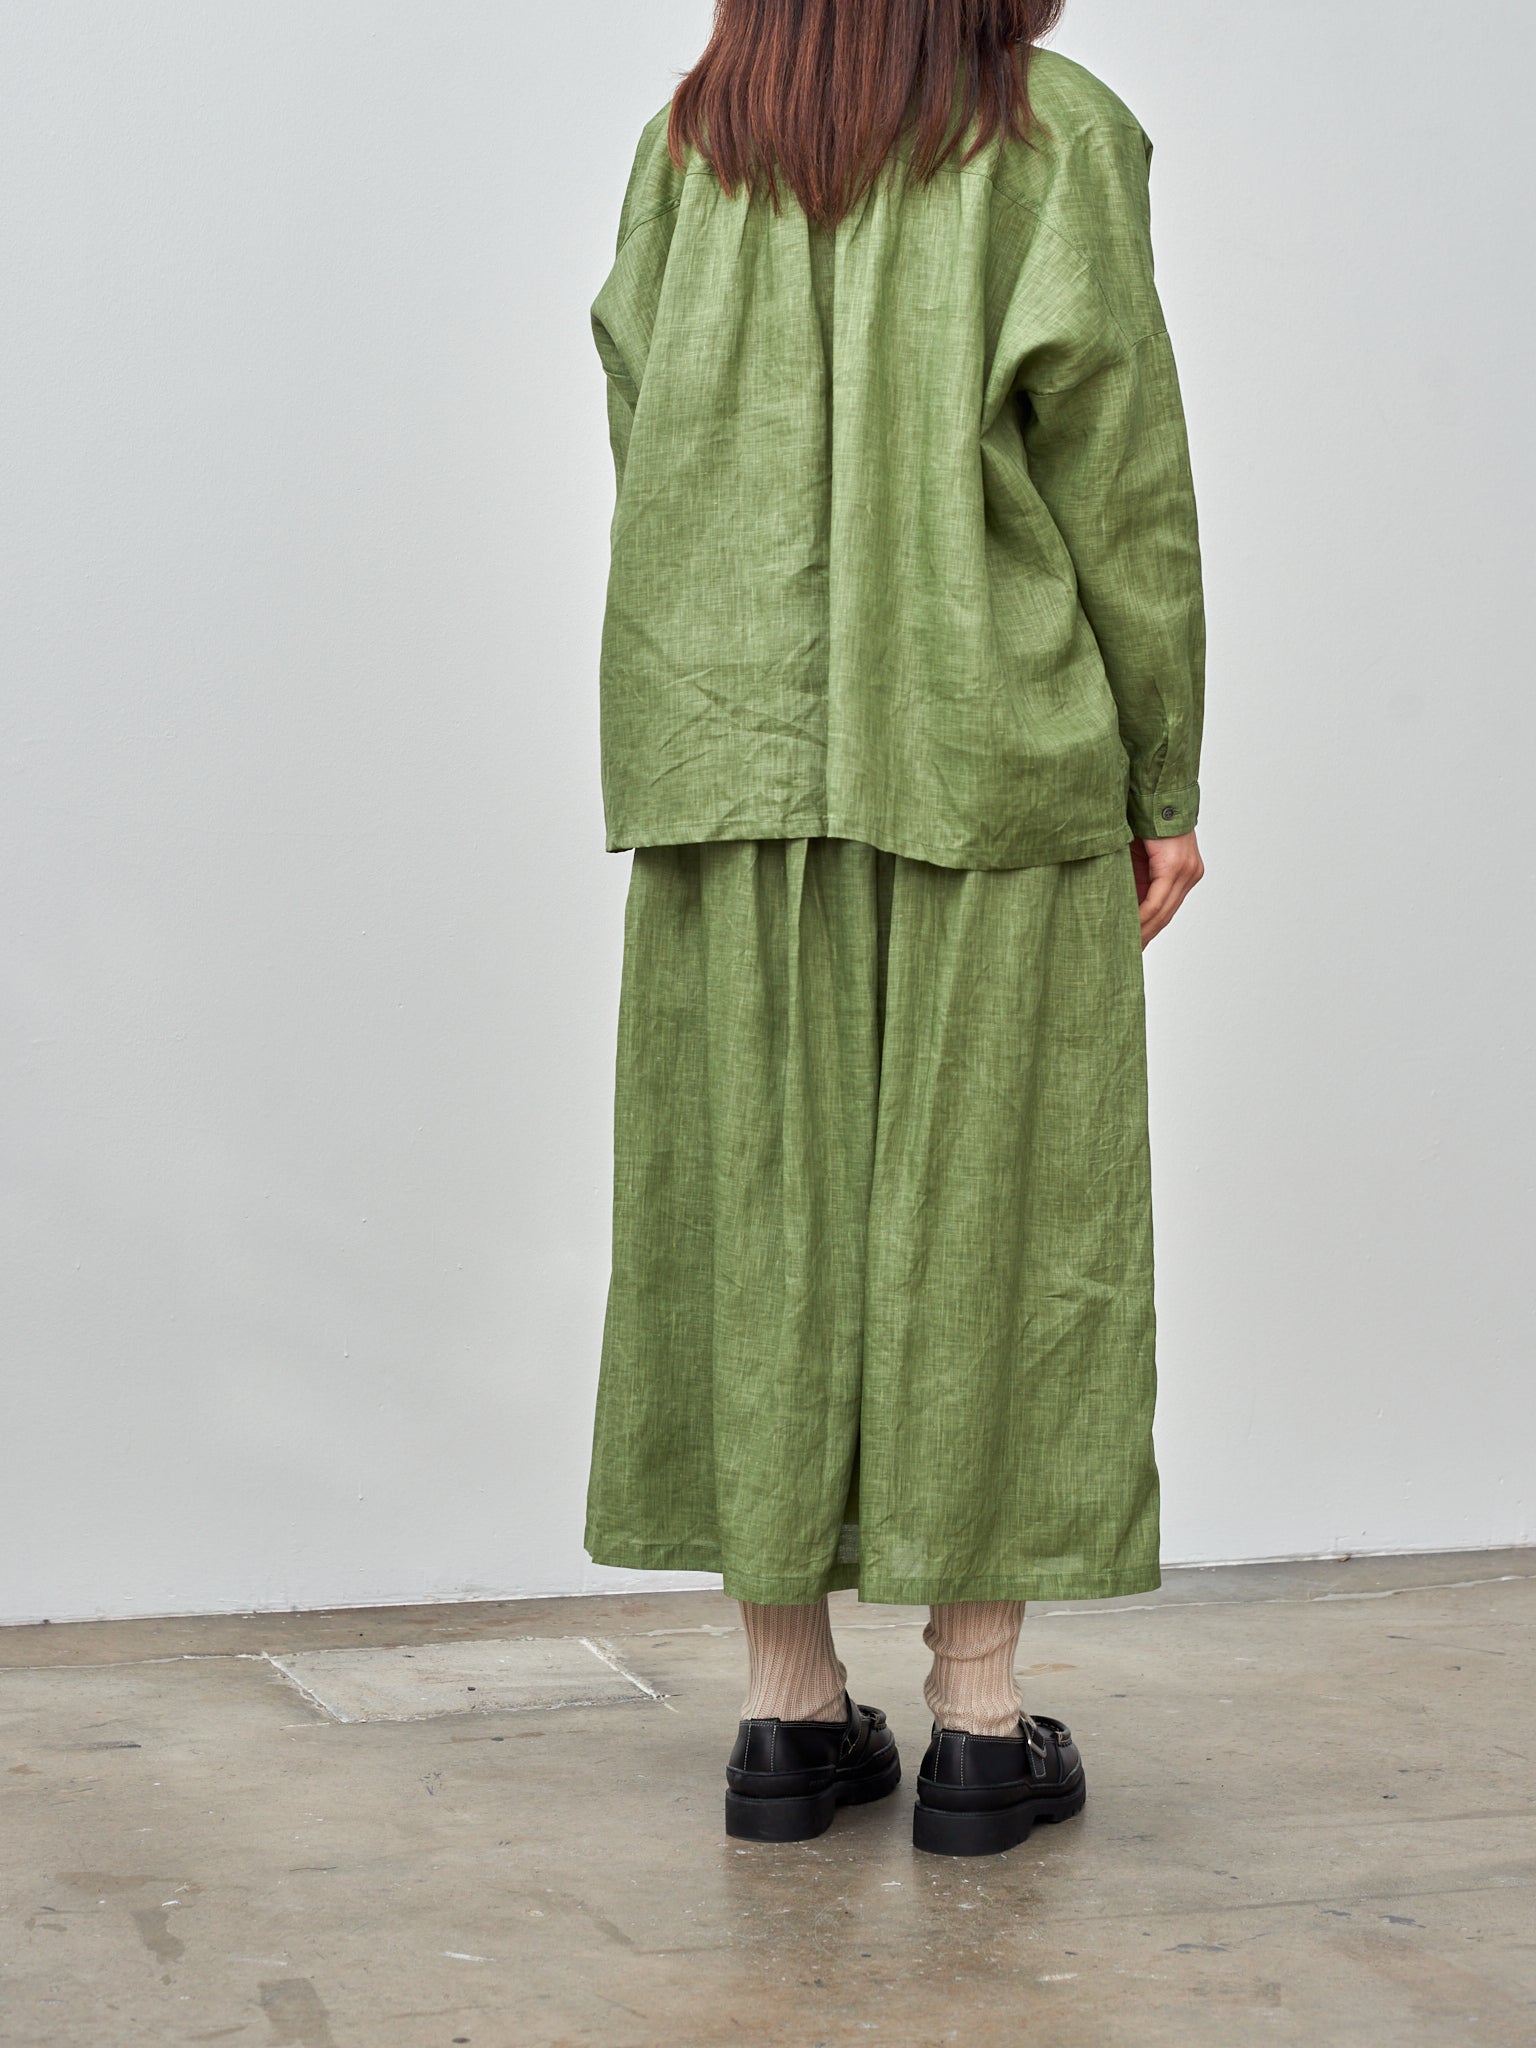 Namu Shop - Ichi Pigment Color Linen Shirt - Green